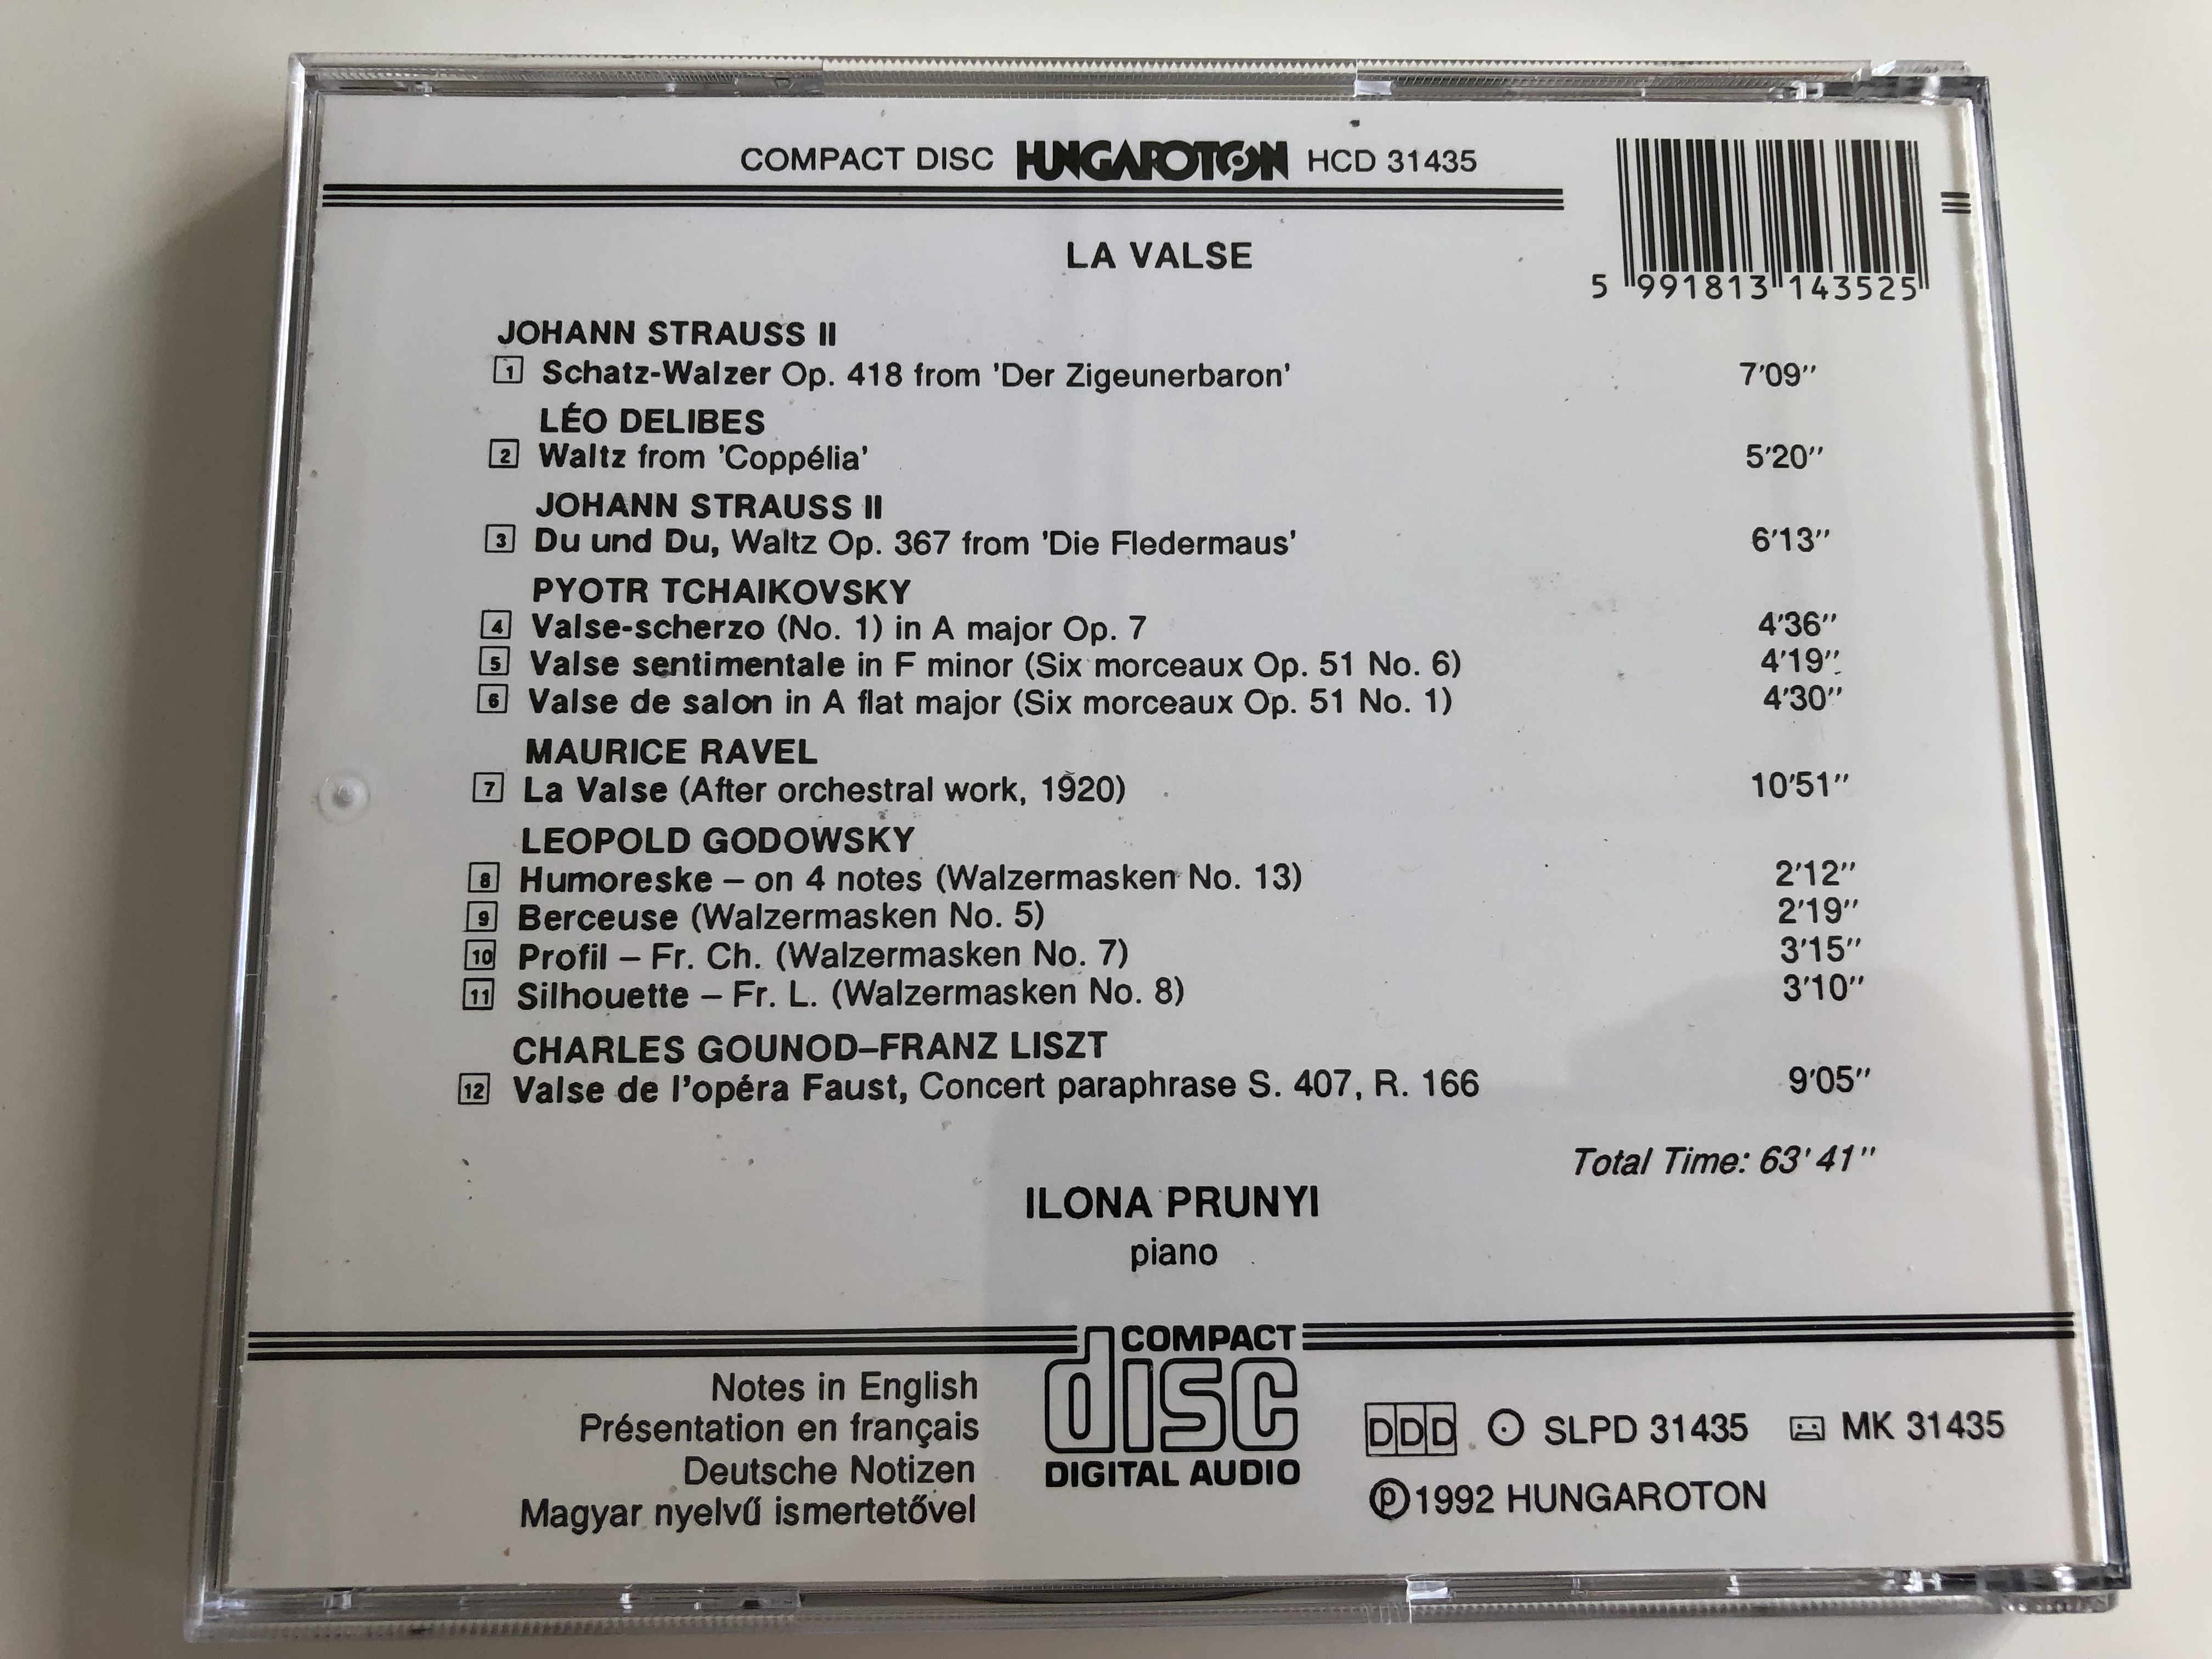 la-valse-j.-strauss-delibes-tchaikovsky-ravel-godowsky-gounod-liszt-ilona-prunyi-piano-hungaroton-classic-audio-cd-1992-hcd-31435-7-.jpg